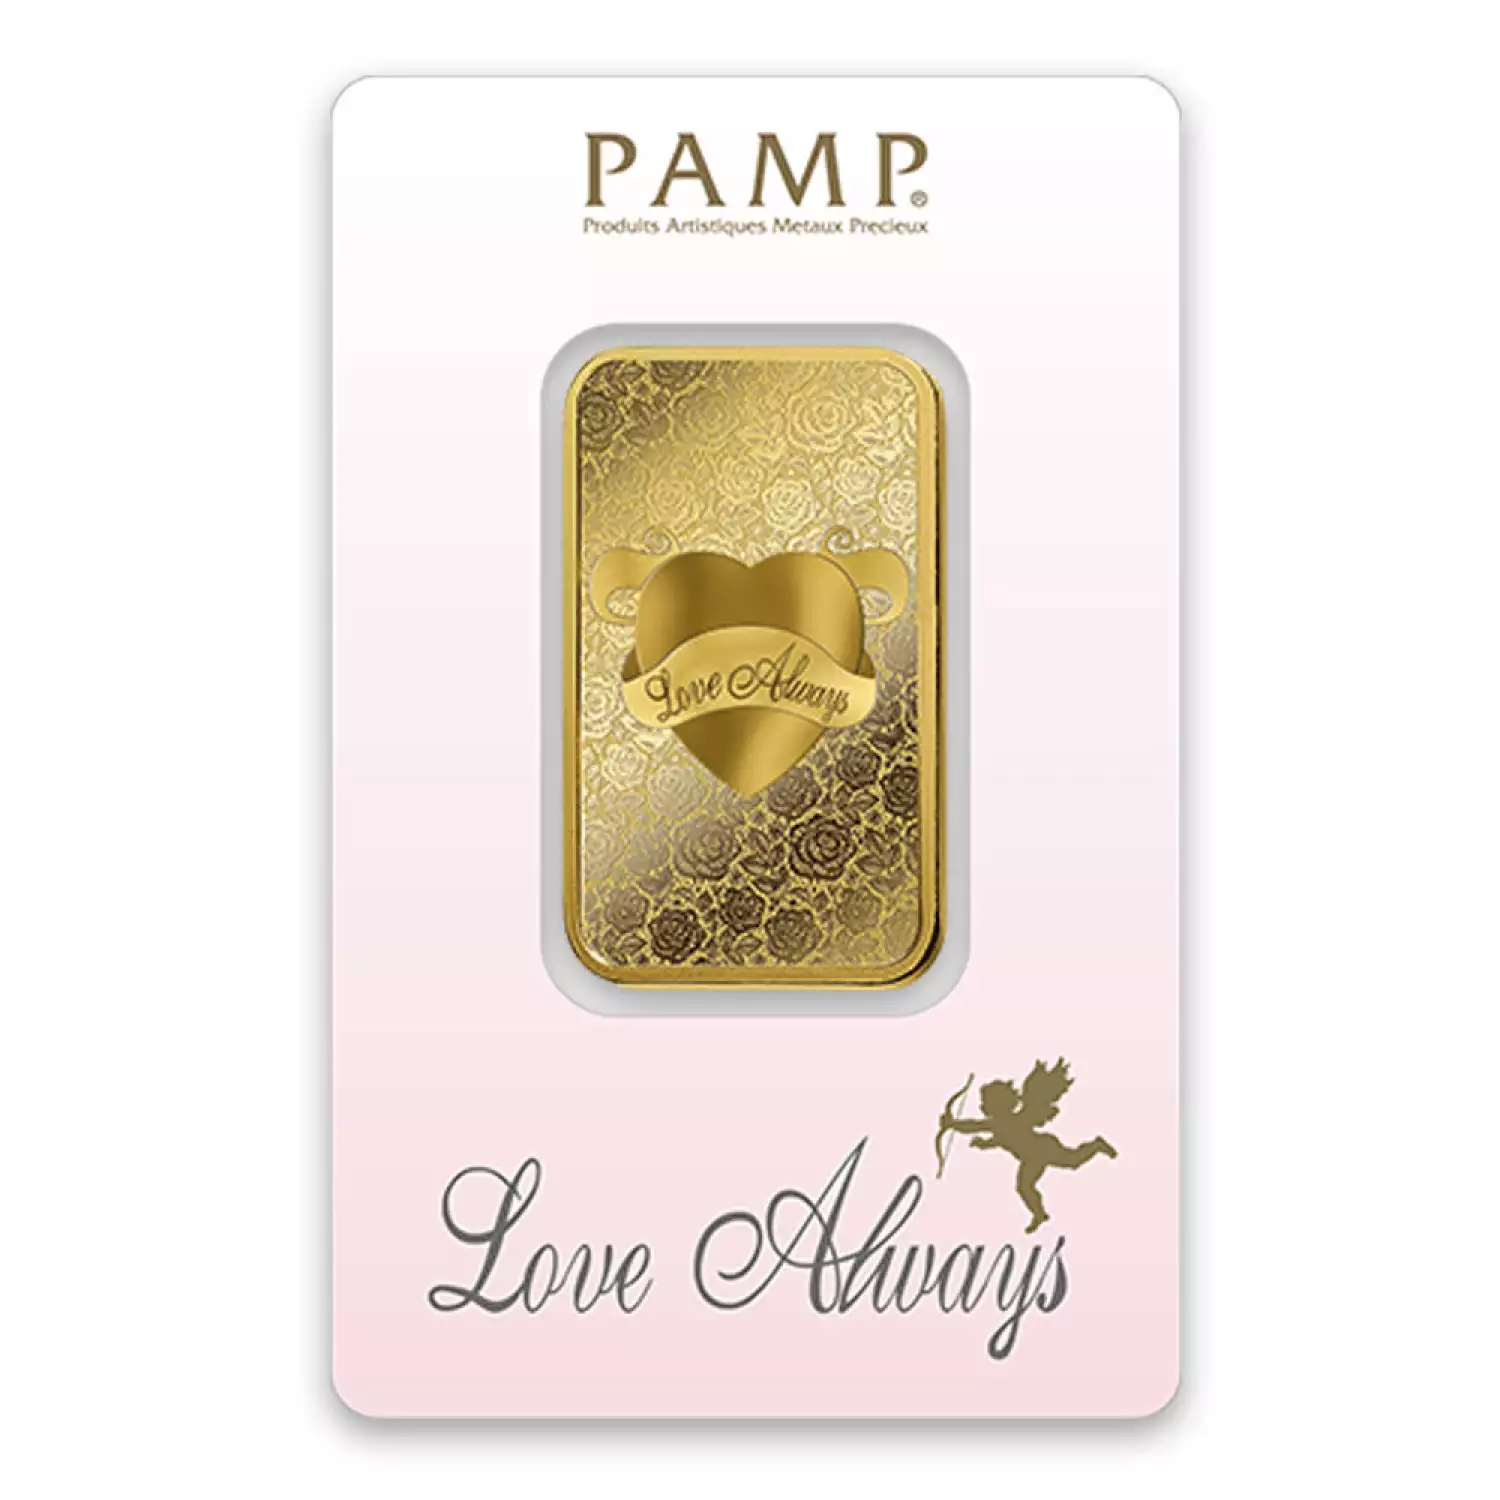 1oz PAMP Gold Bar - Love Always (2)